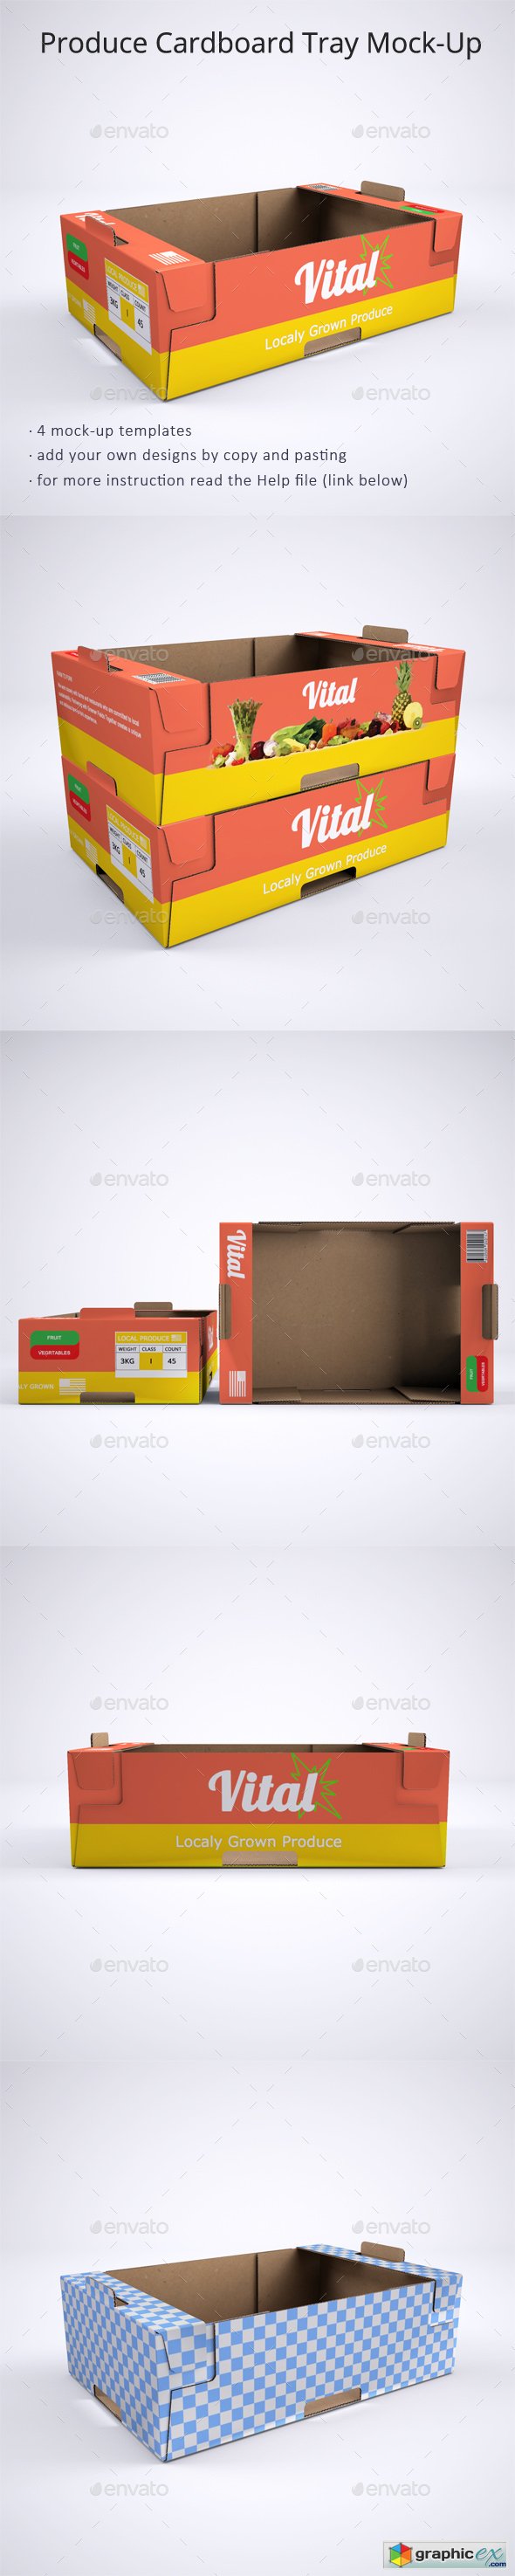 Produce Cardboard Tray or Box Mock-Up